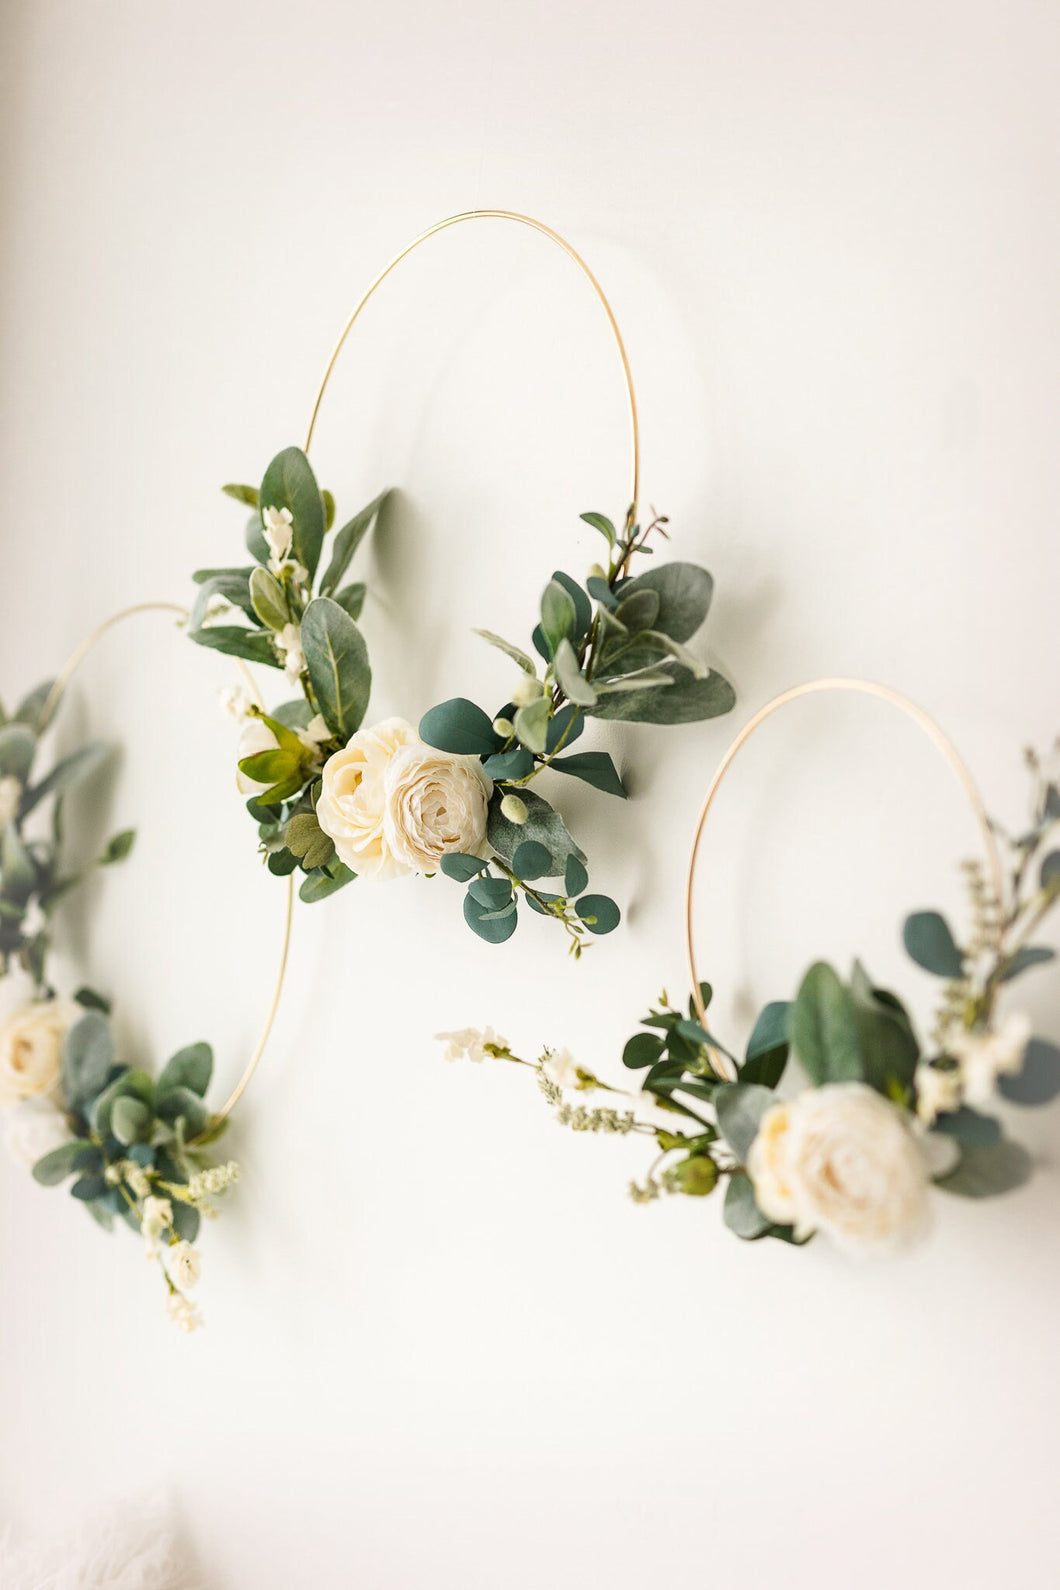 Set of 3 Floral Hoop Wreath - Neutral - Minimalist - Wedding Floral Hoops - Nursery Decor - Floral Backdrop - Gold Metal Ring Wreath - Boho